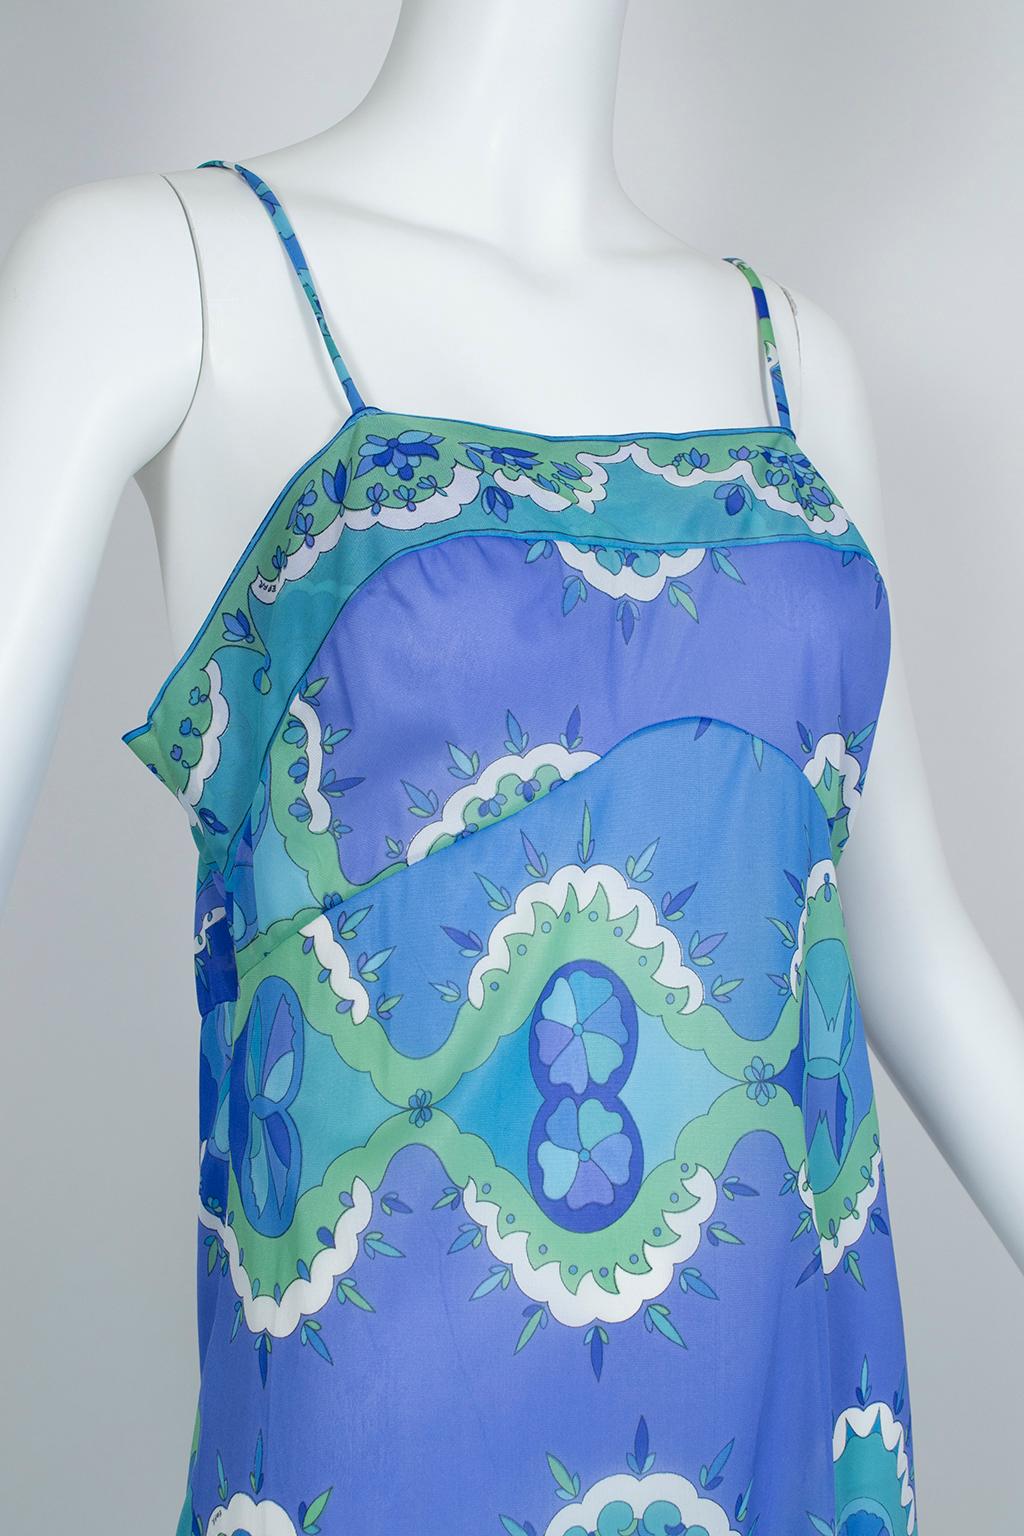 Women's Emilio Pucci Formfit Rogers Blue Palette Negligée Slip Mini Dress - Small, 1960s